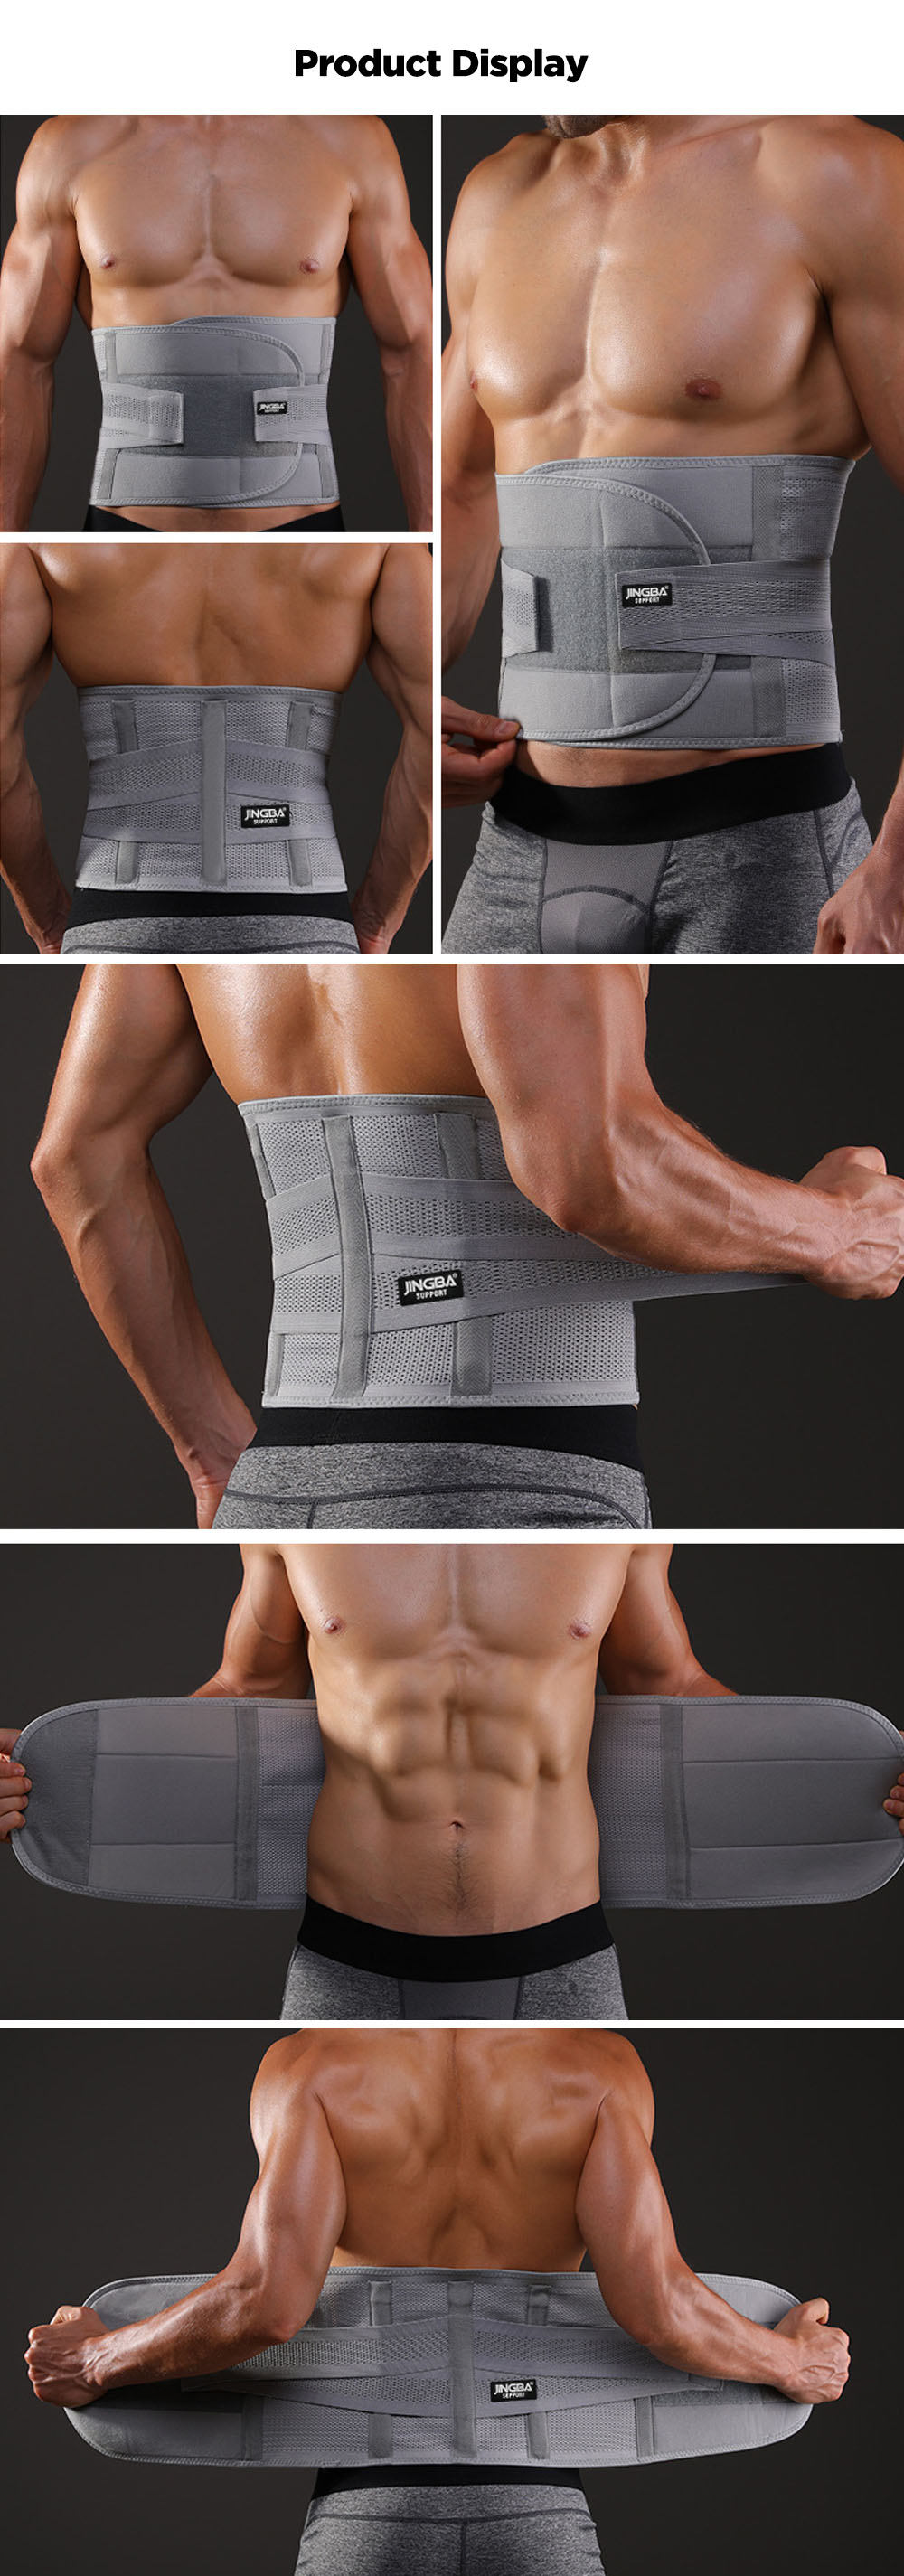 JINGBA-SUPPORT-Adjustable-Sport-Protection-Waist-Support-Belt-Lower-Brace-Pain-Relief-Lumbar-Brace-f-1827301-3